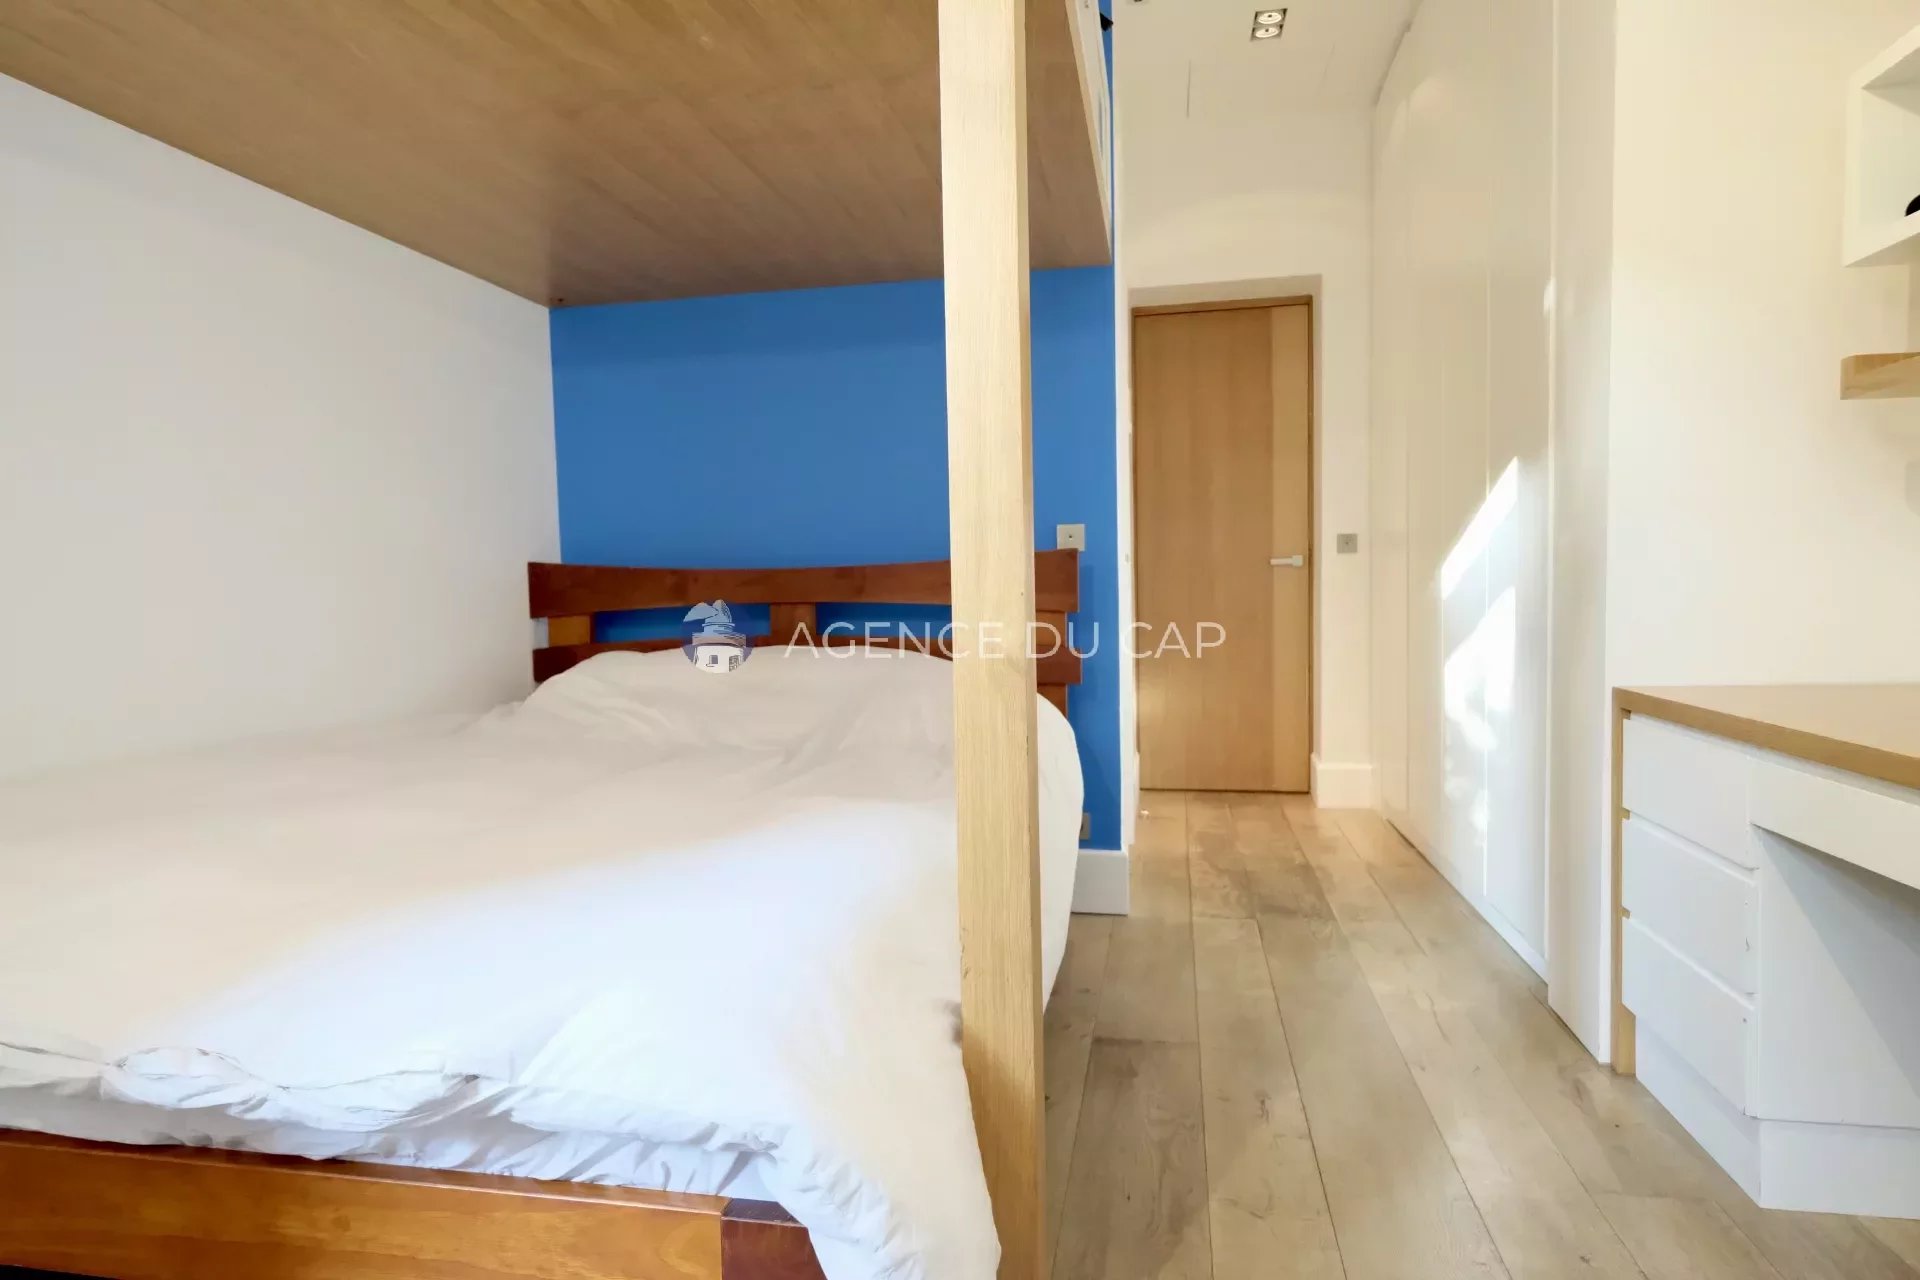 4/5 bedrooms apartment for rent- Jasmin -75016 Paris